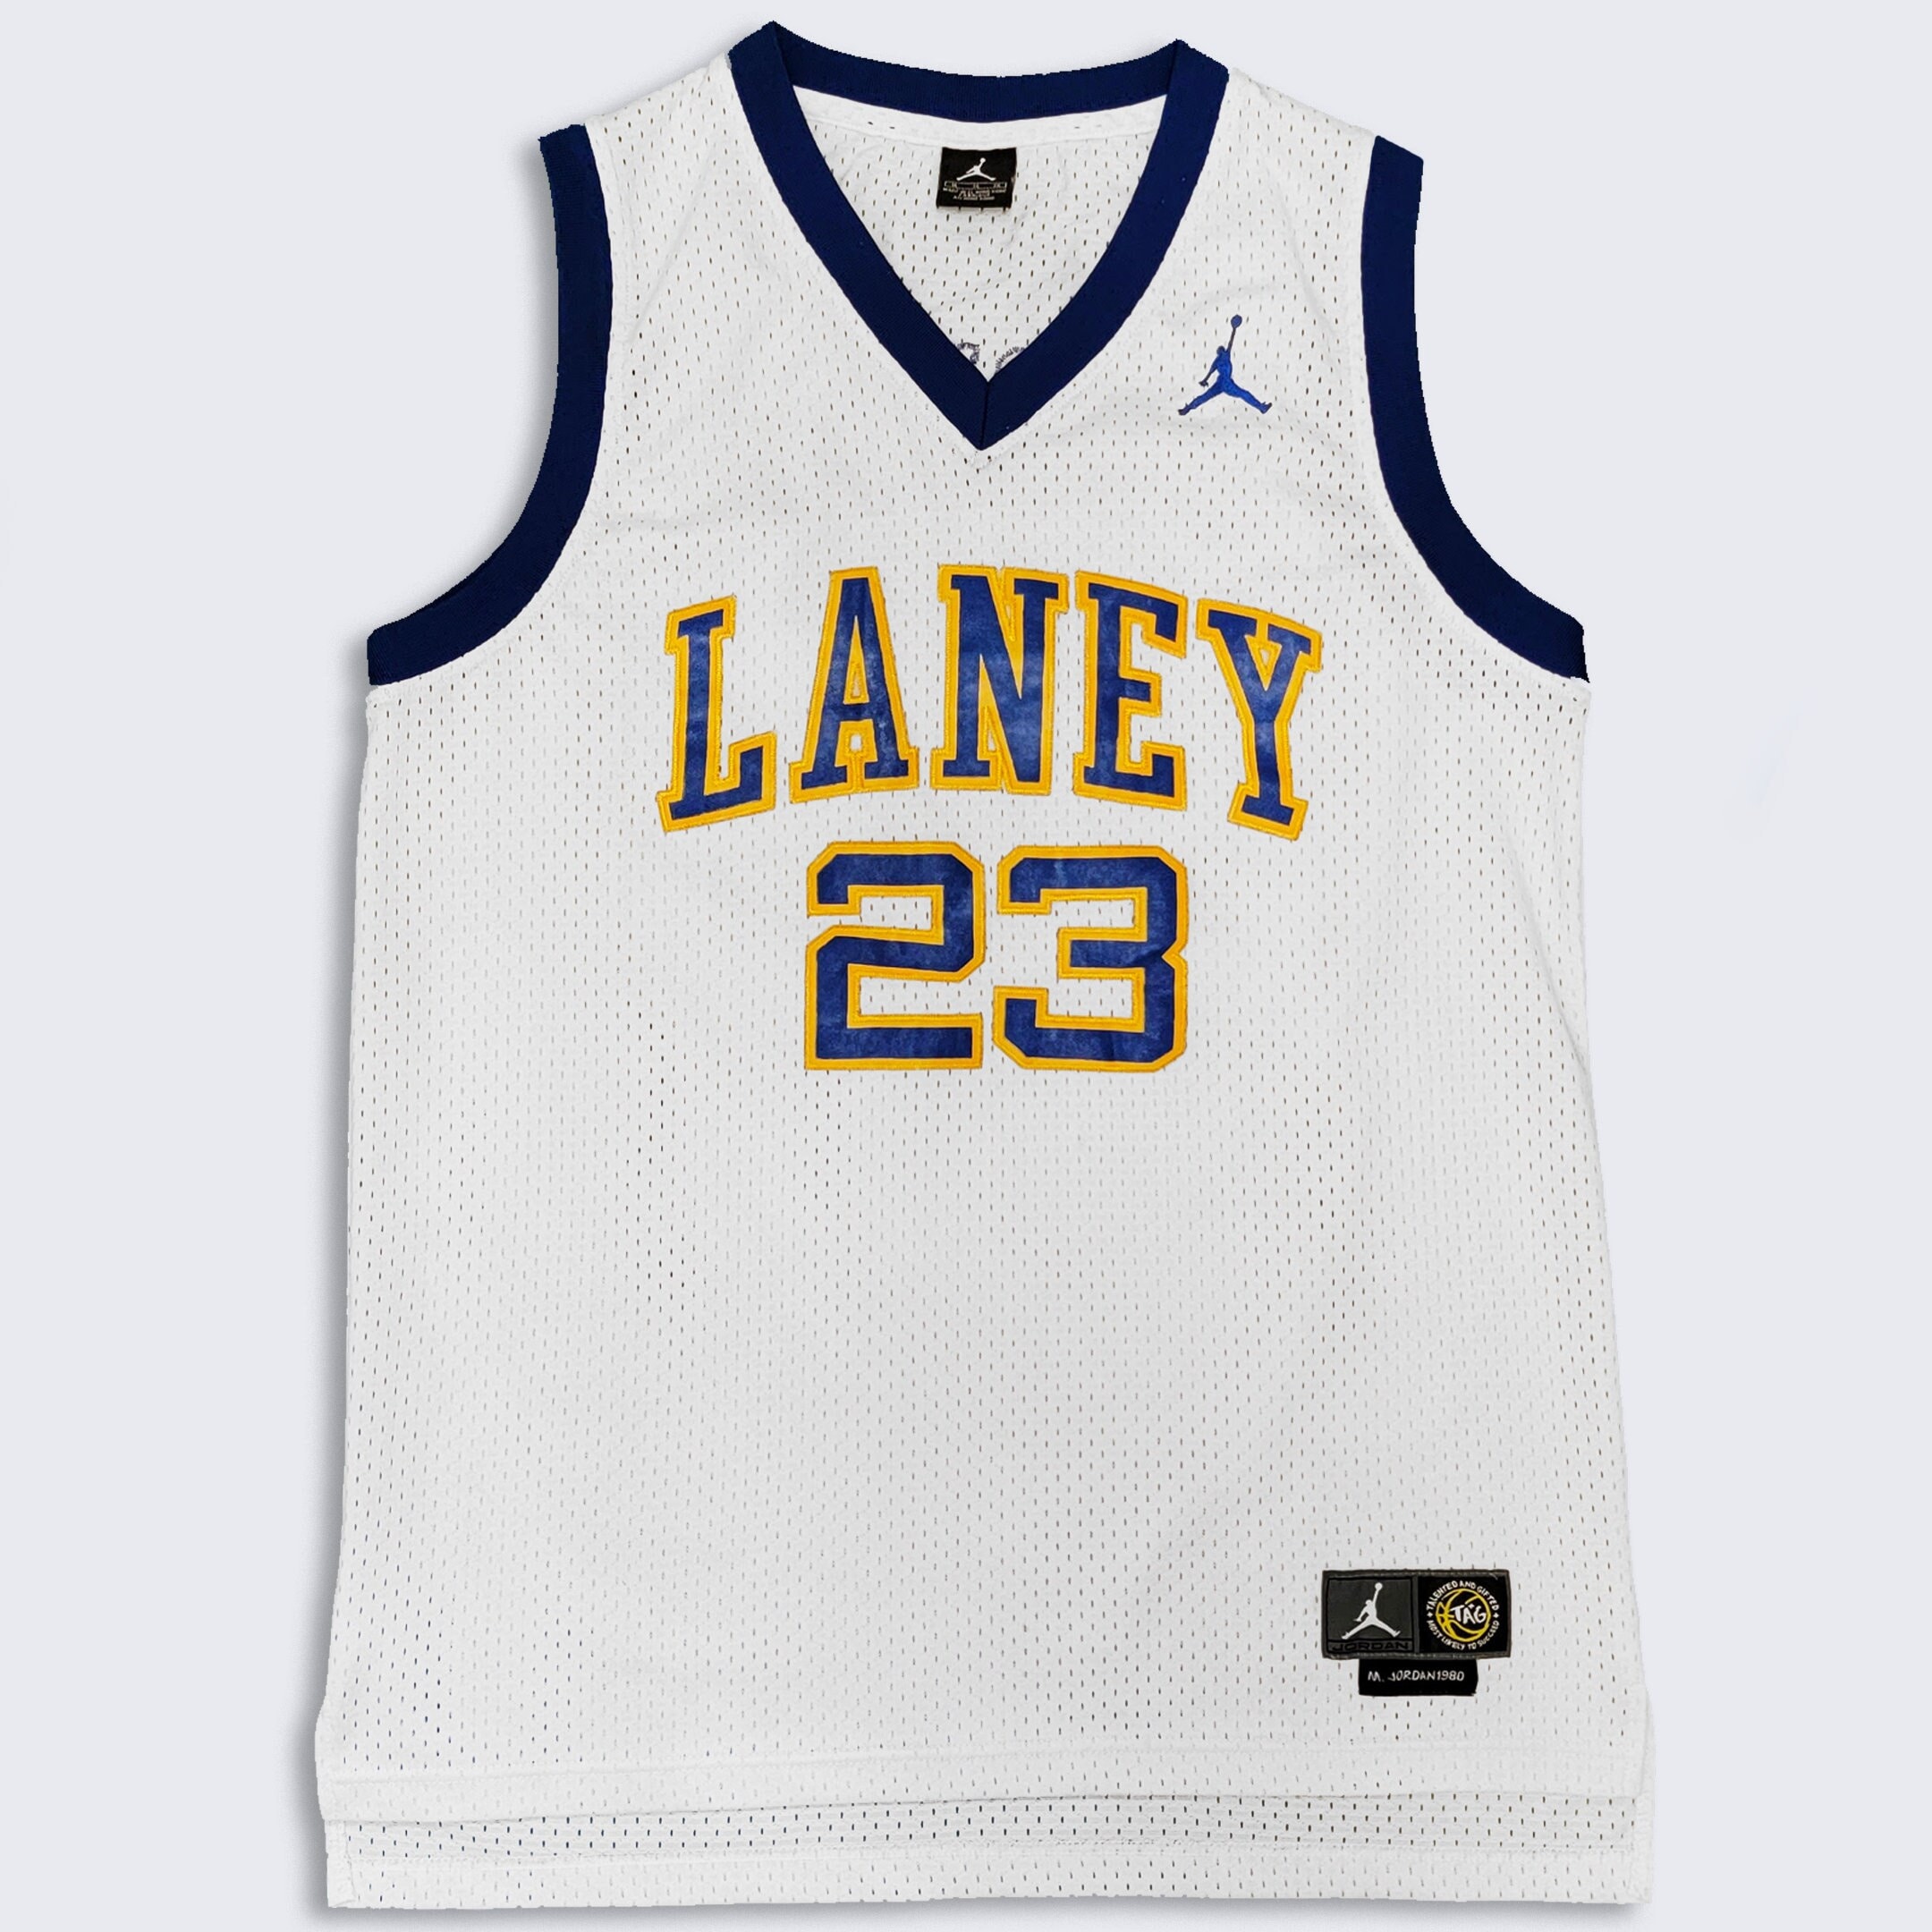 Limited Edition Legends Michael Jordan Laney Jersey